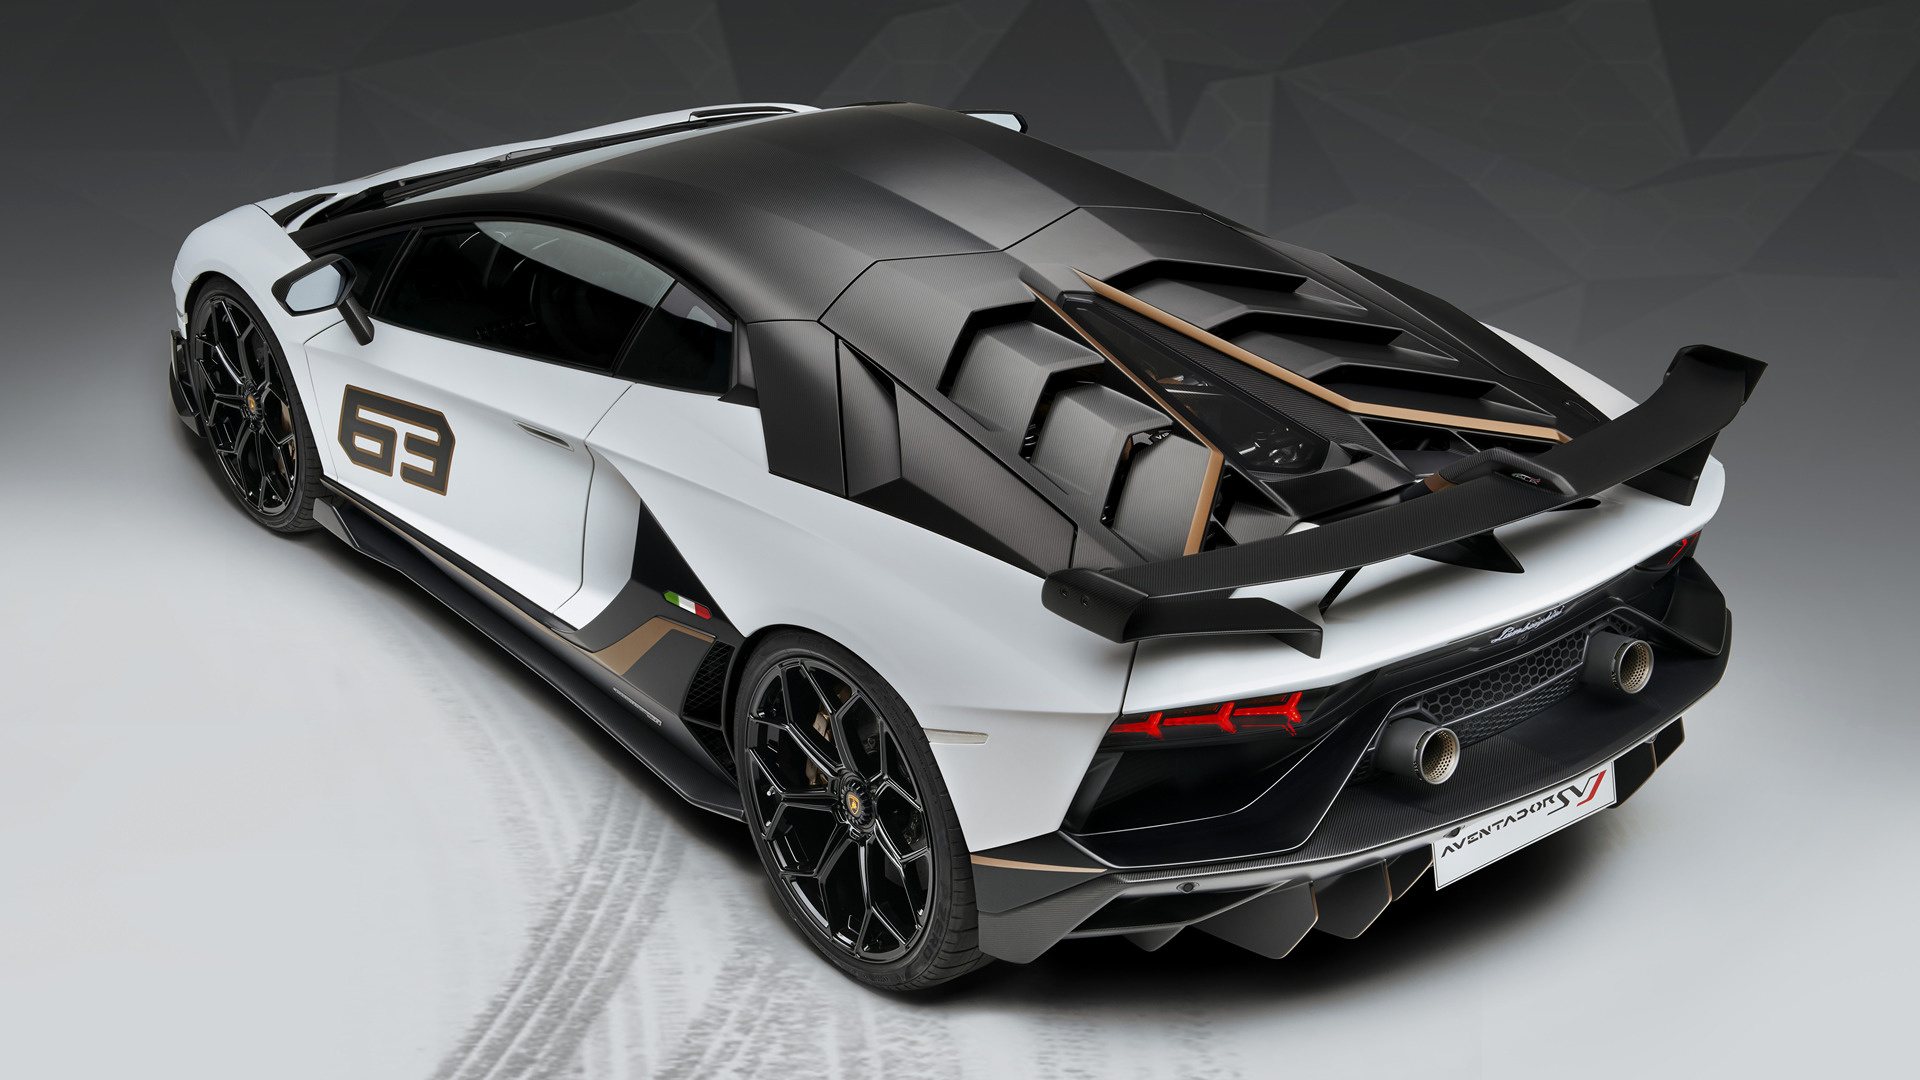 Télécharger des fonds d'écran Lamborghini Aventador Svj 63 HD